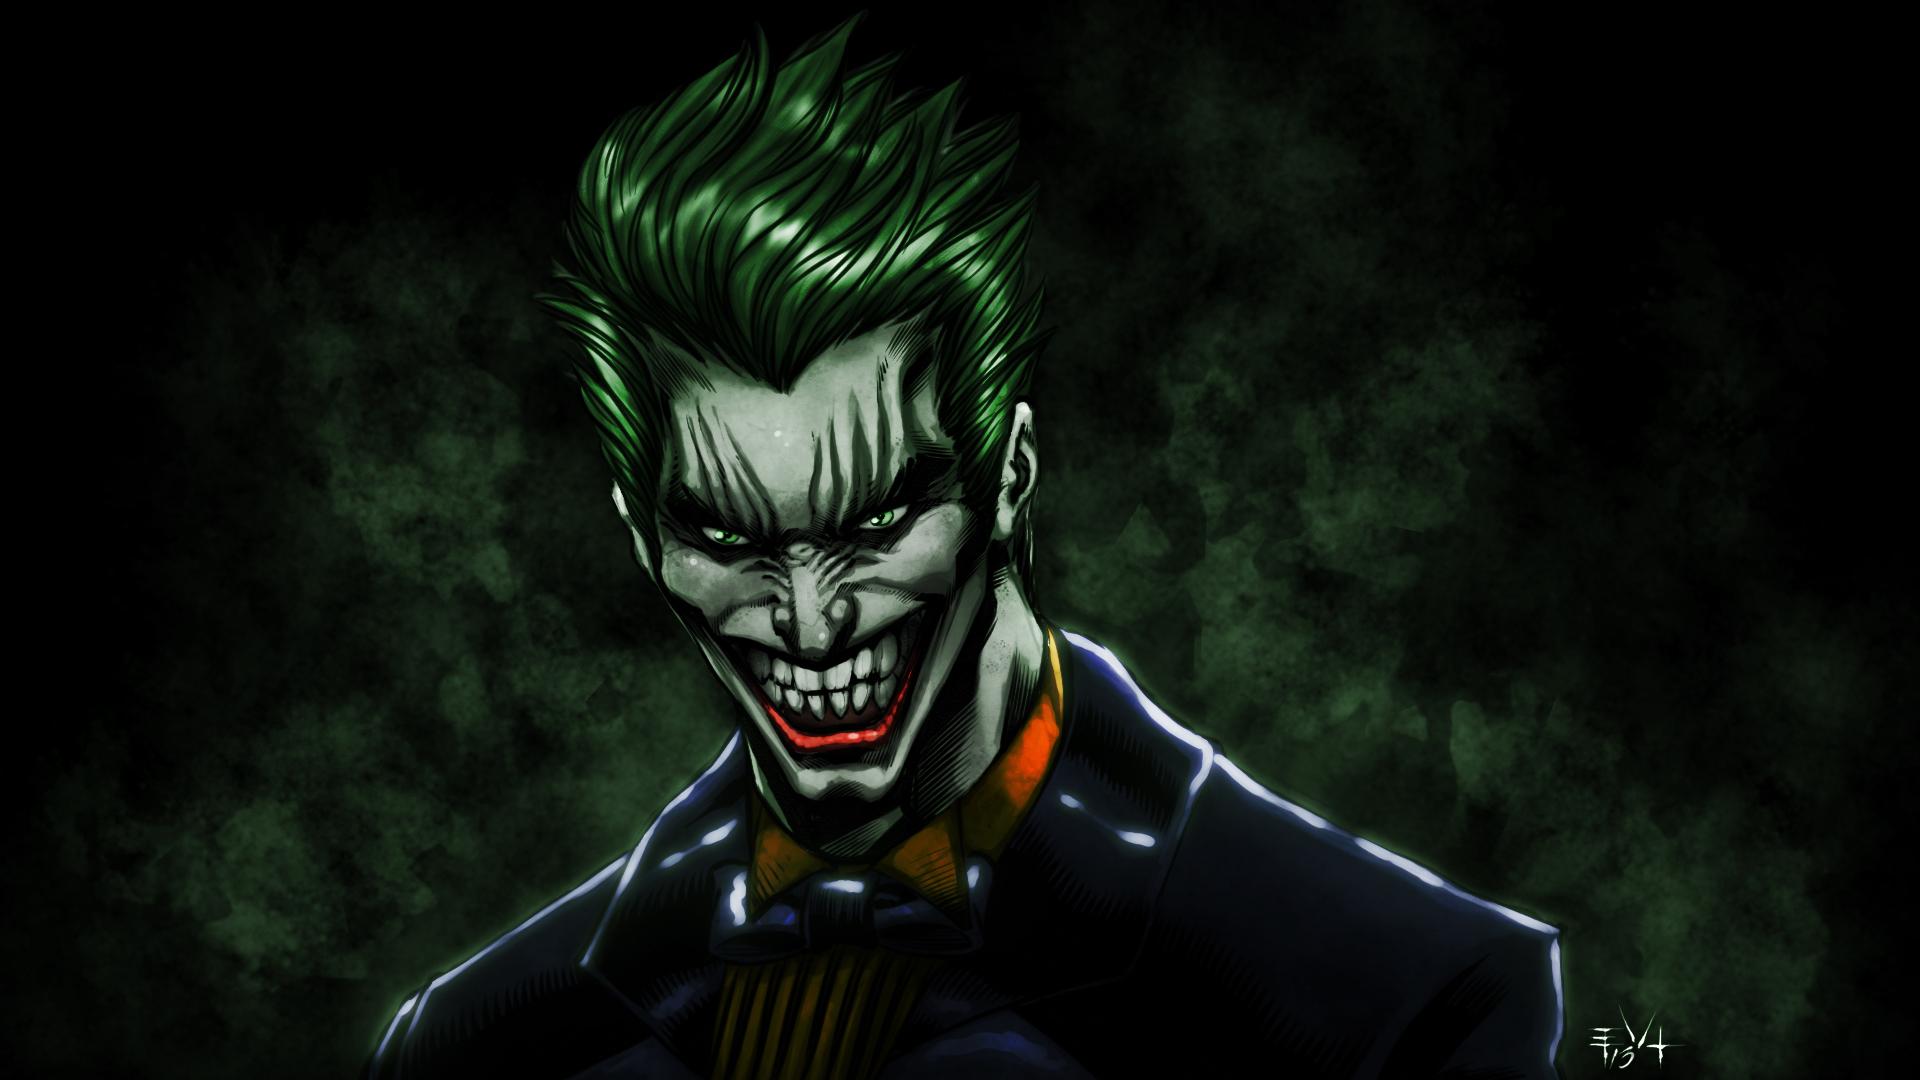 Joker Wallpaper Hd, Top Wallpaper Hd, Image Of Joker